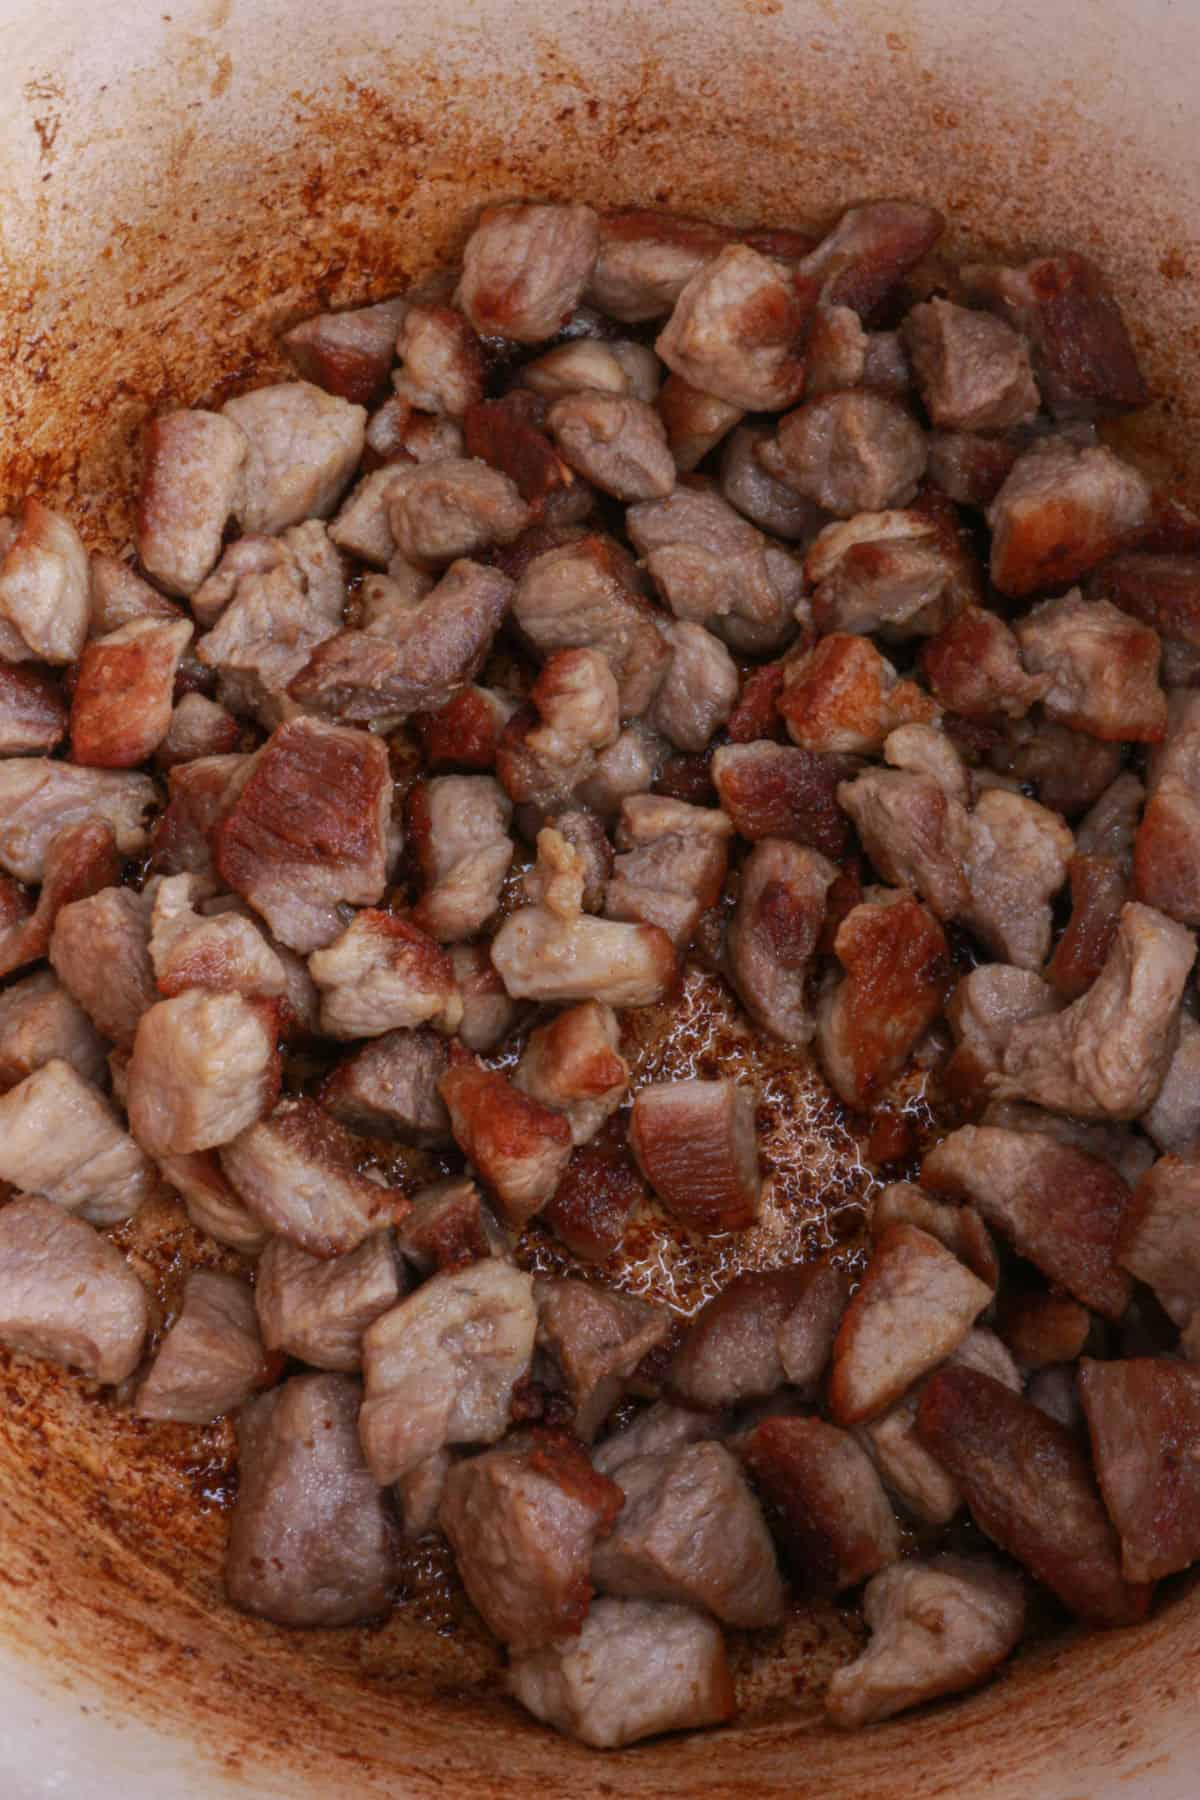 Pieces of golden-brown pork in a pot